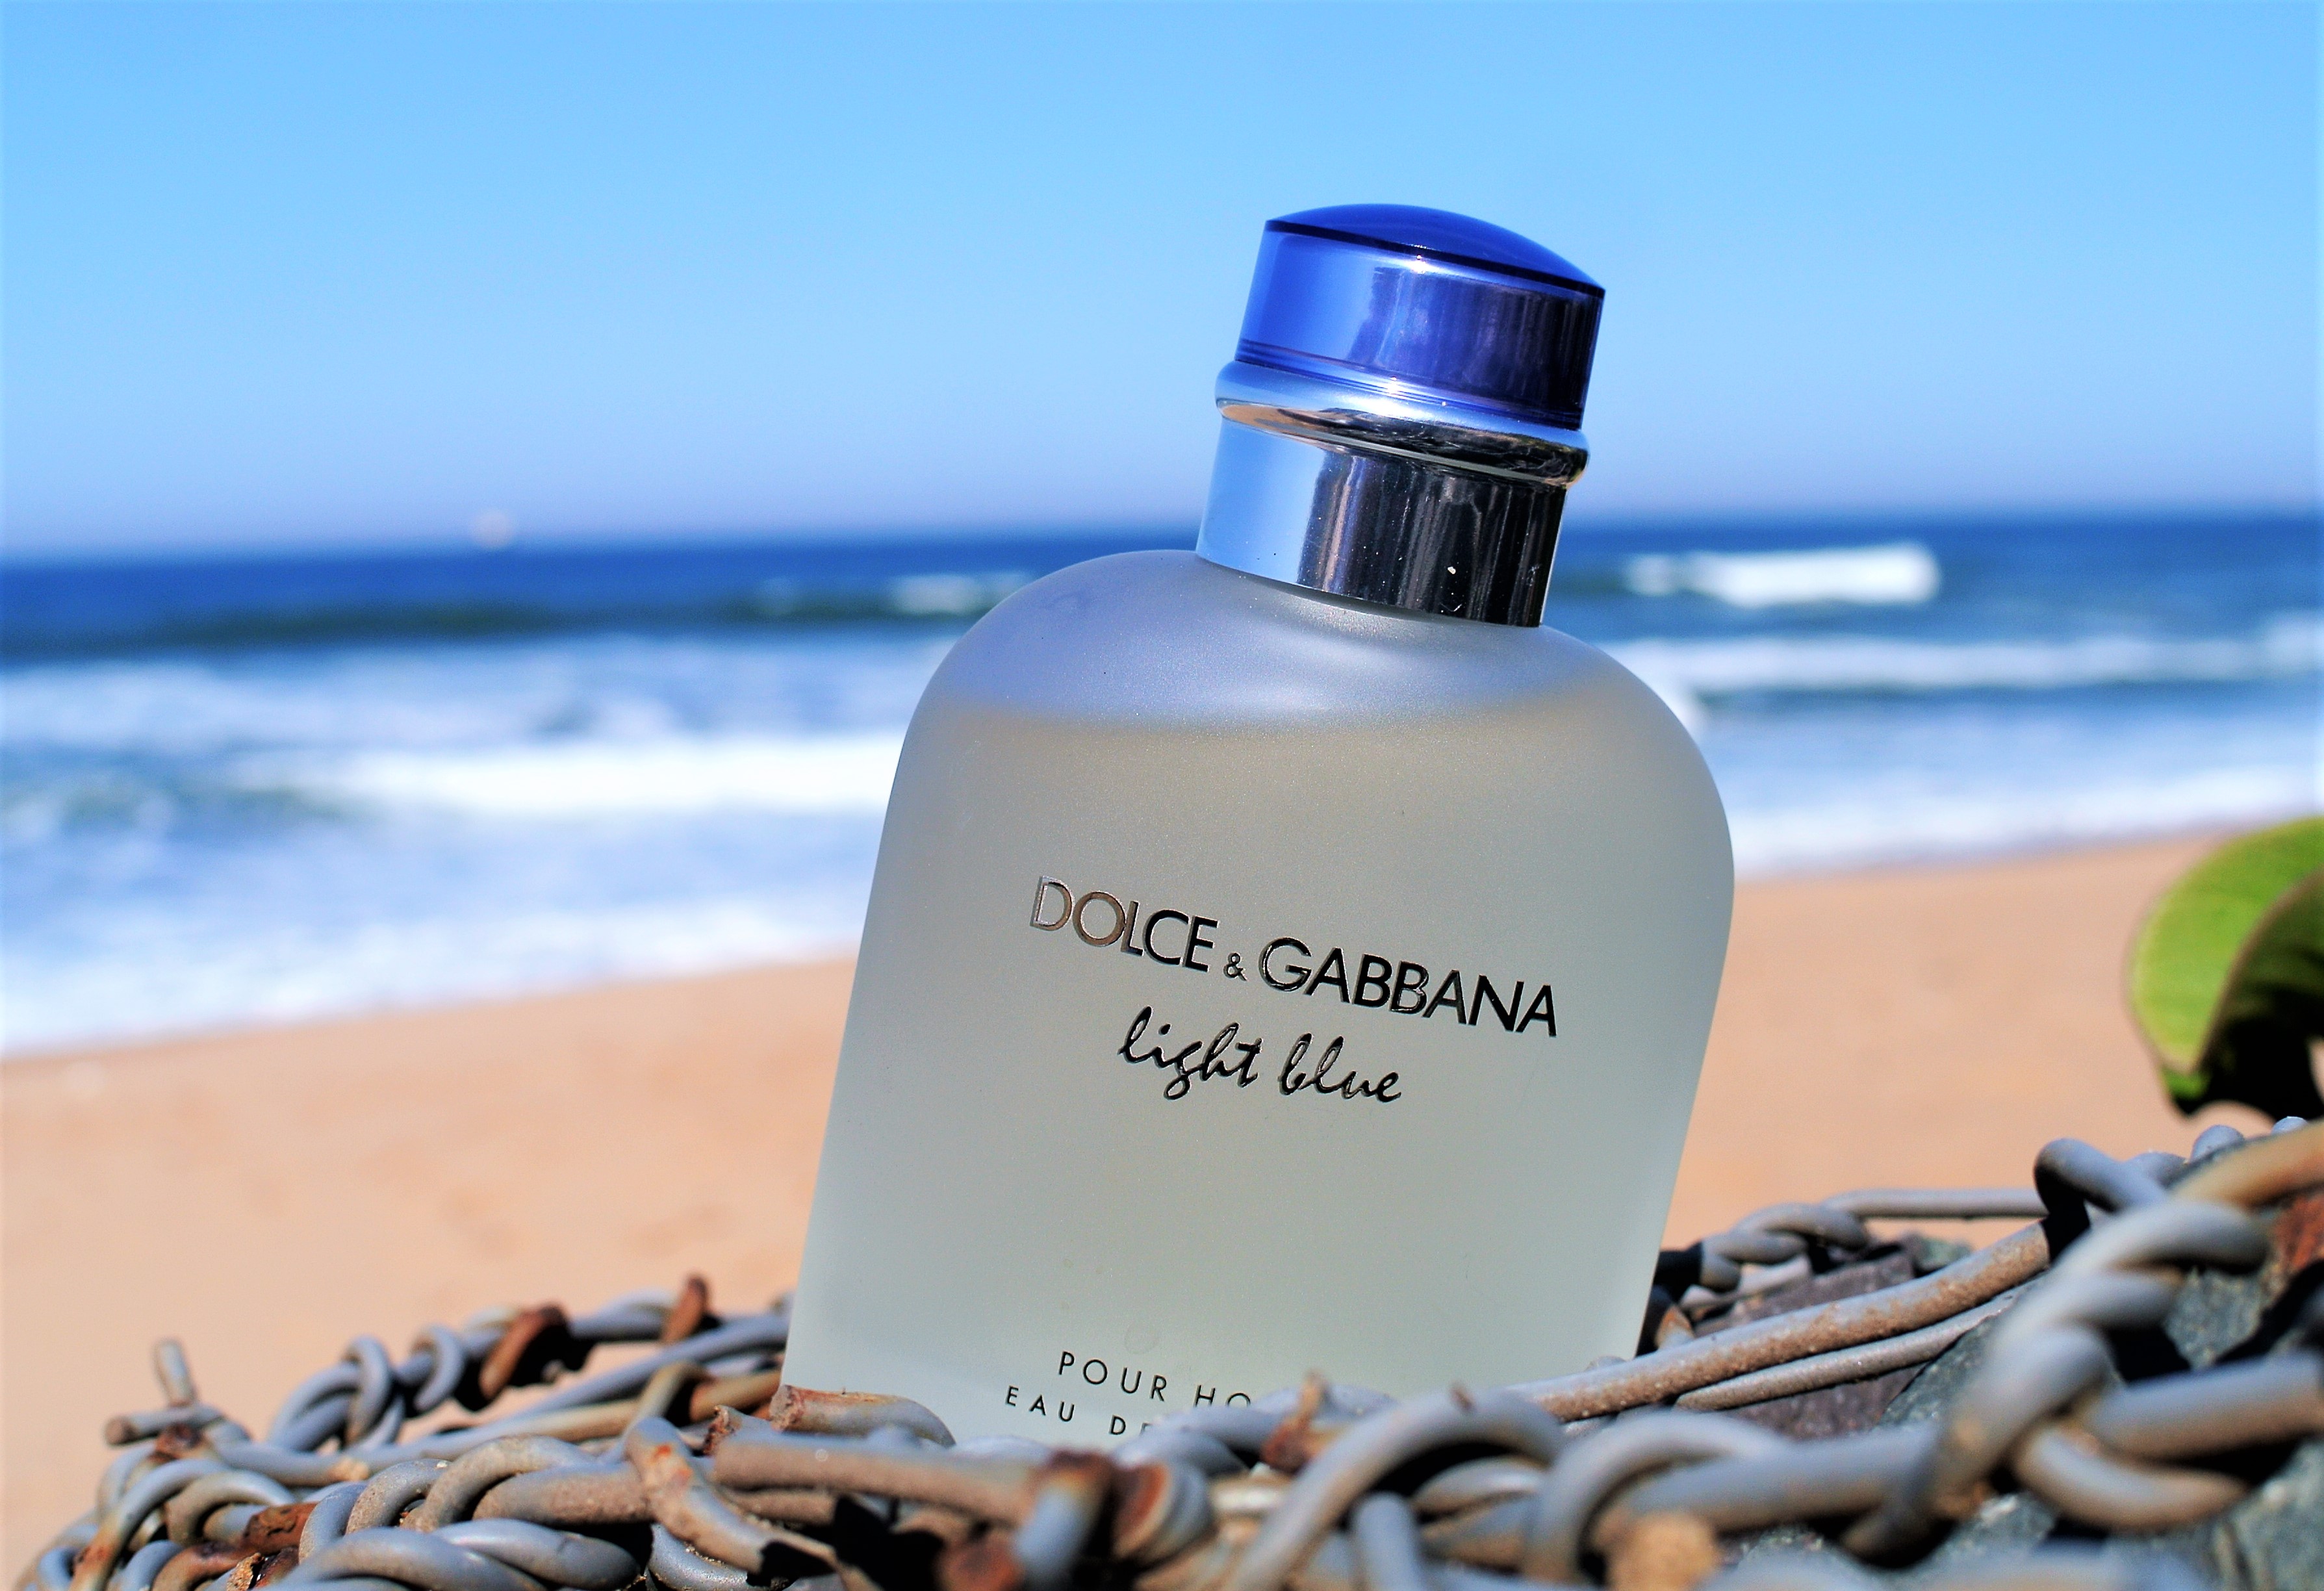 dolce gabbana light blue for him review